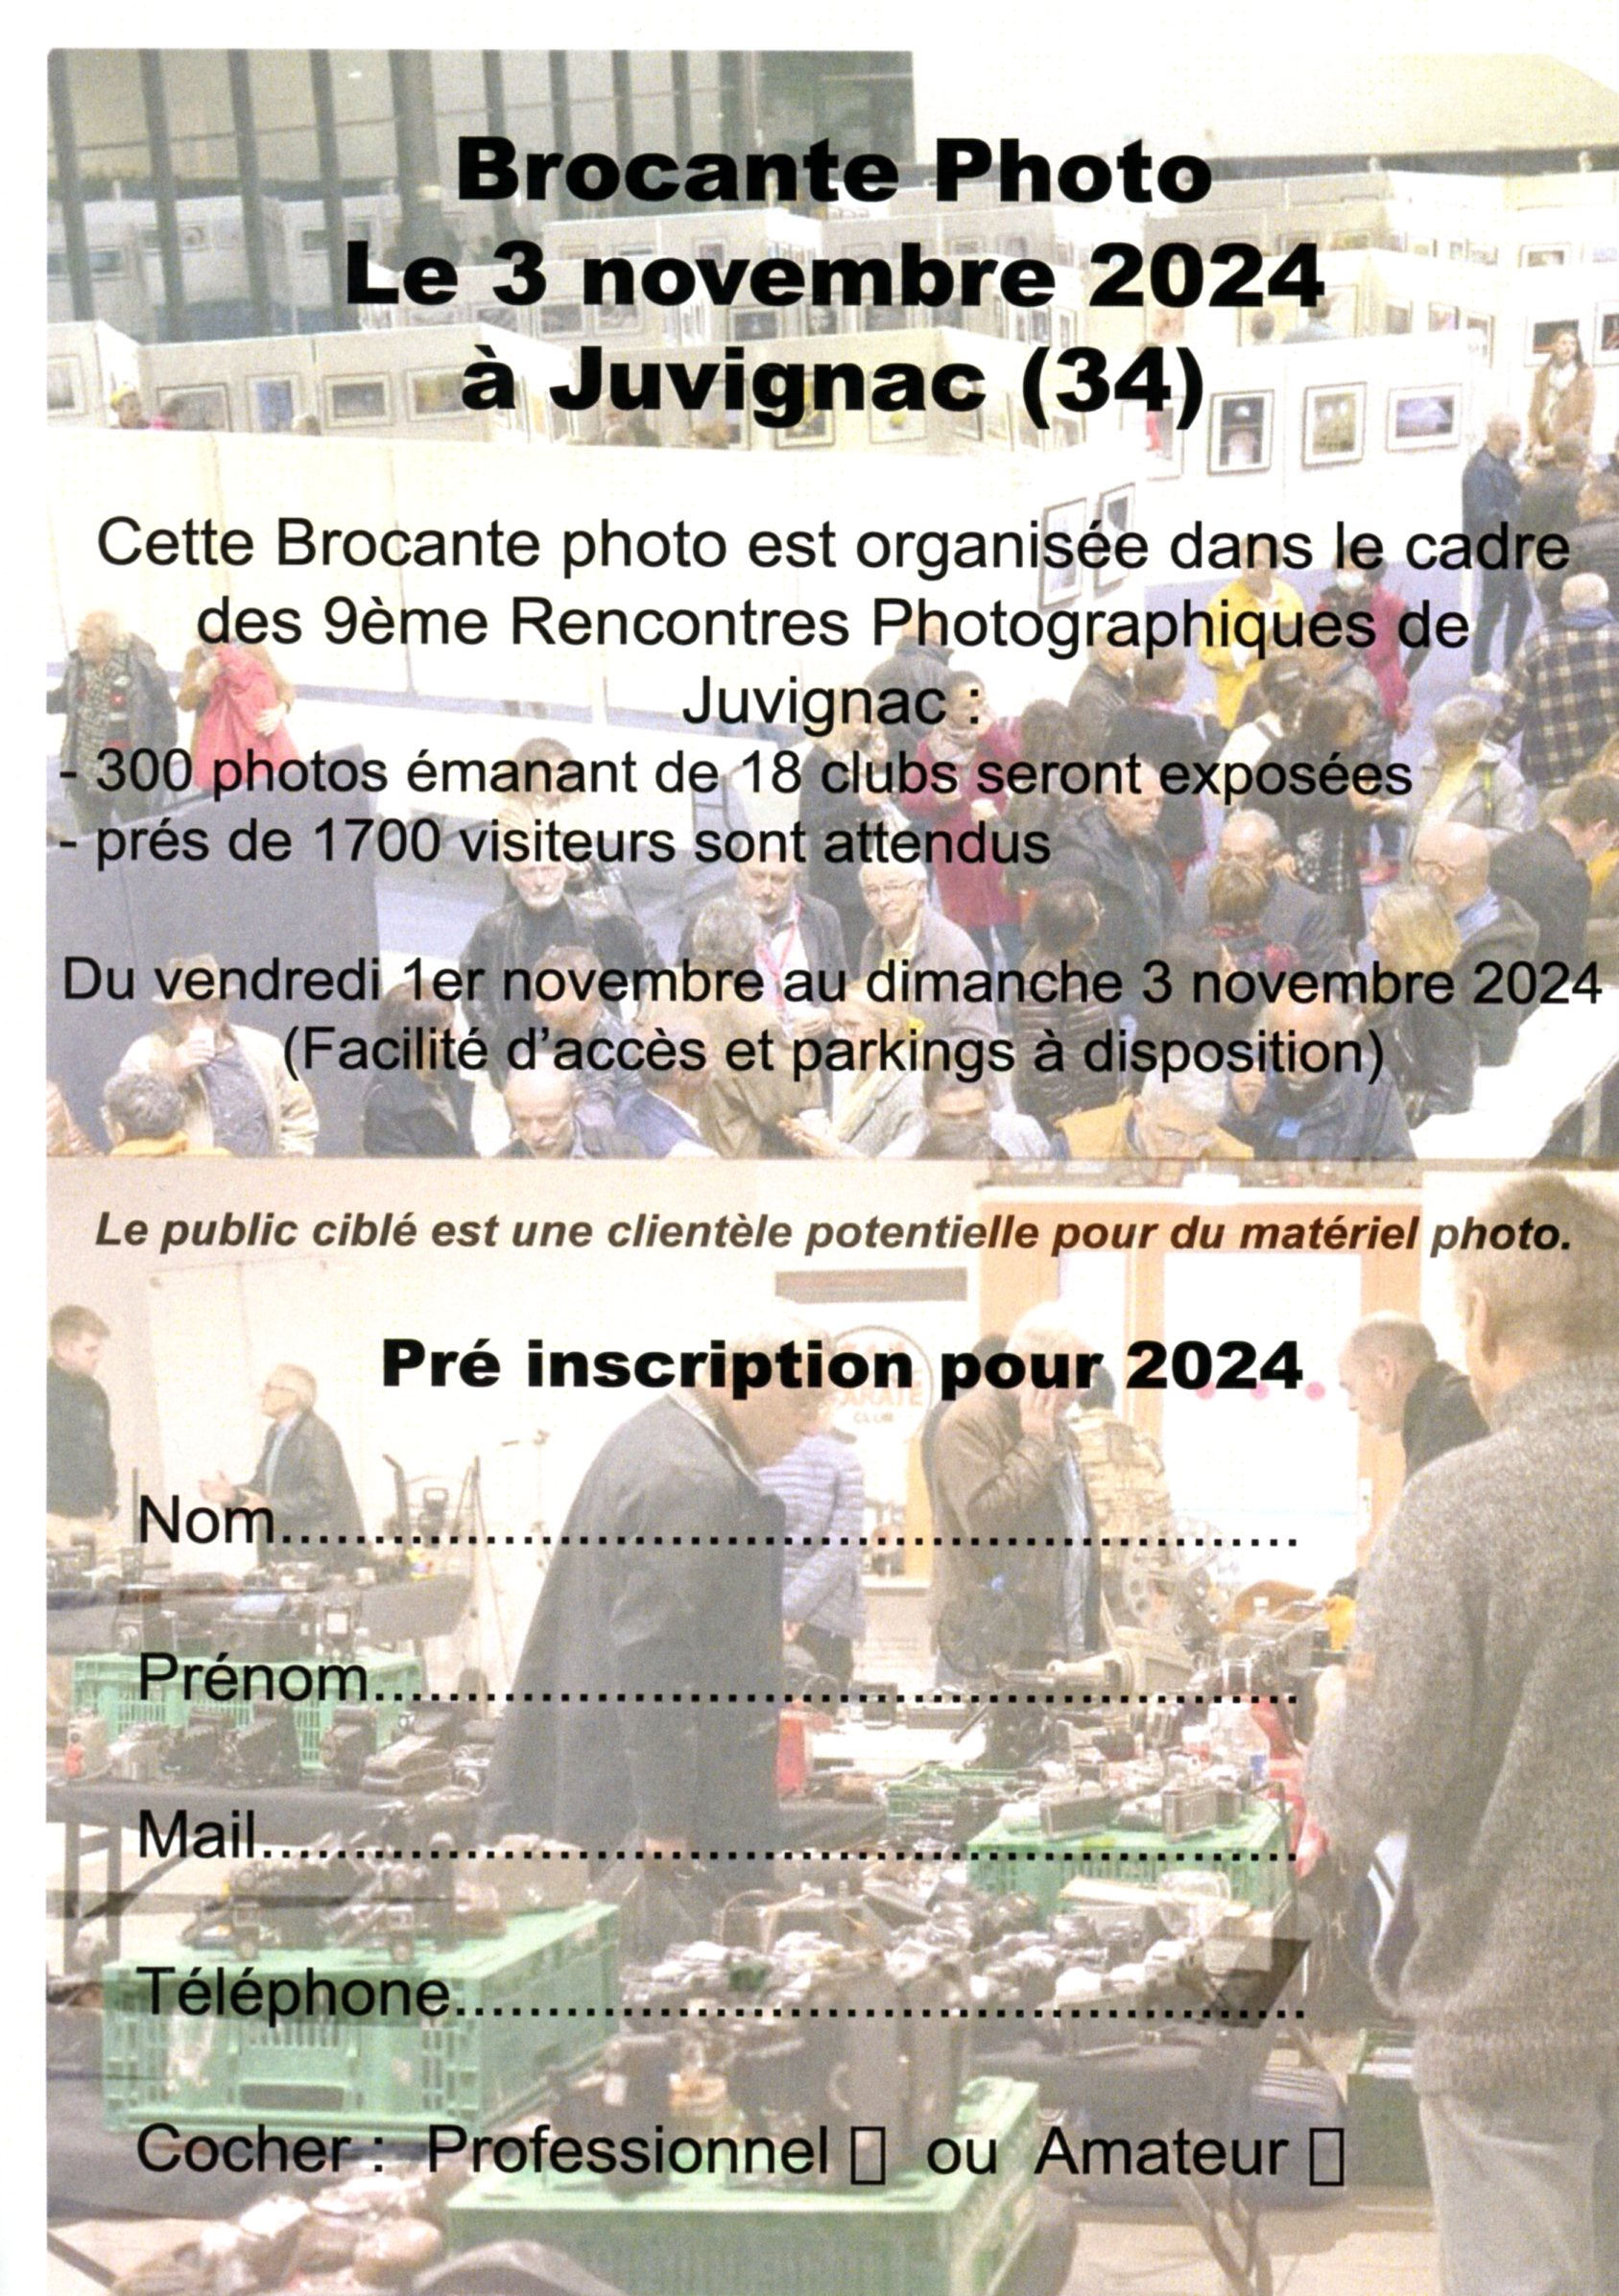 Juvignac, 3 novembre 2024 - Brocante Photo